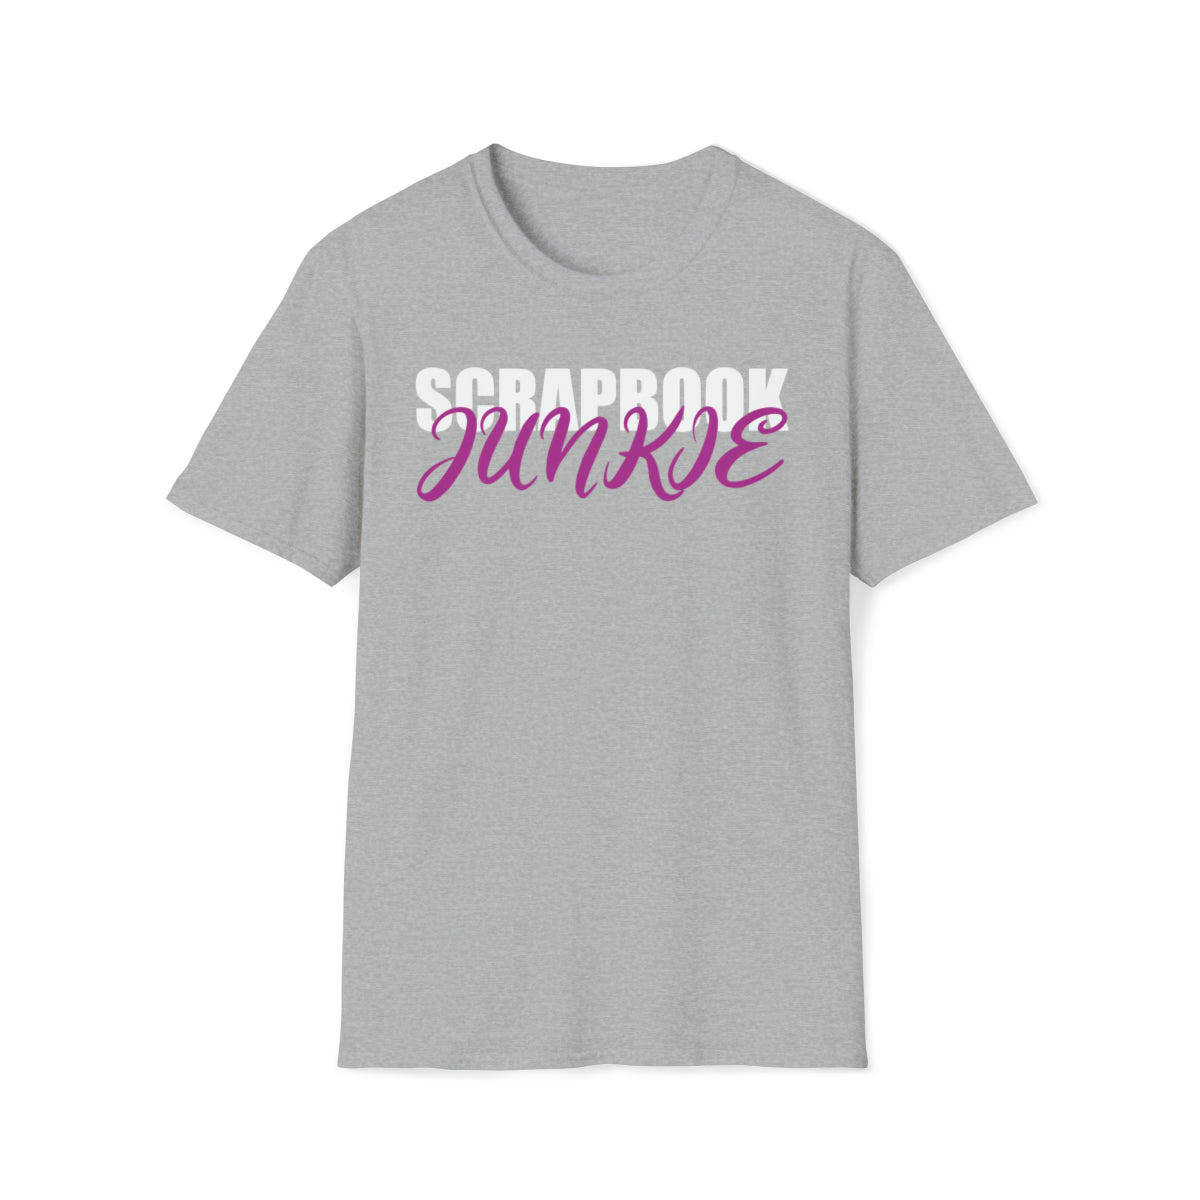 Scrapbook Junkie - Short Sleeve Unisex Soft Style T-Shirt